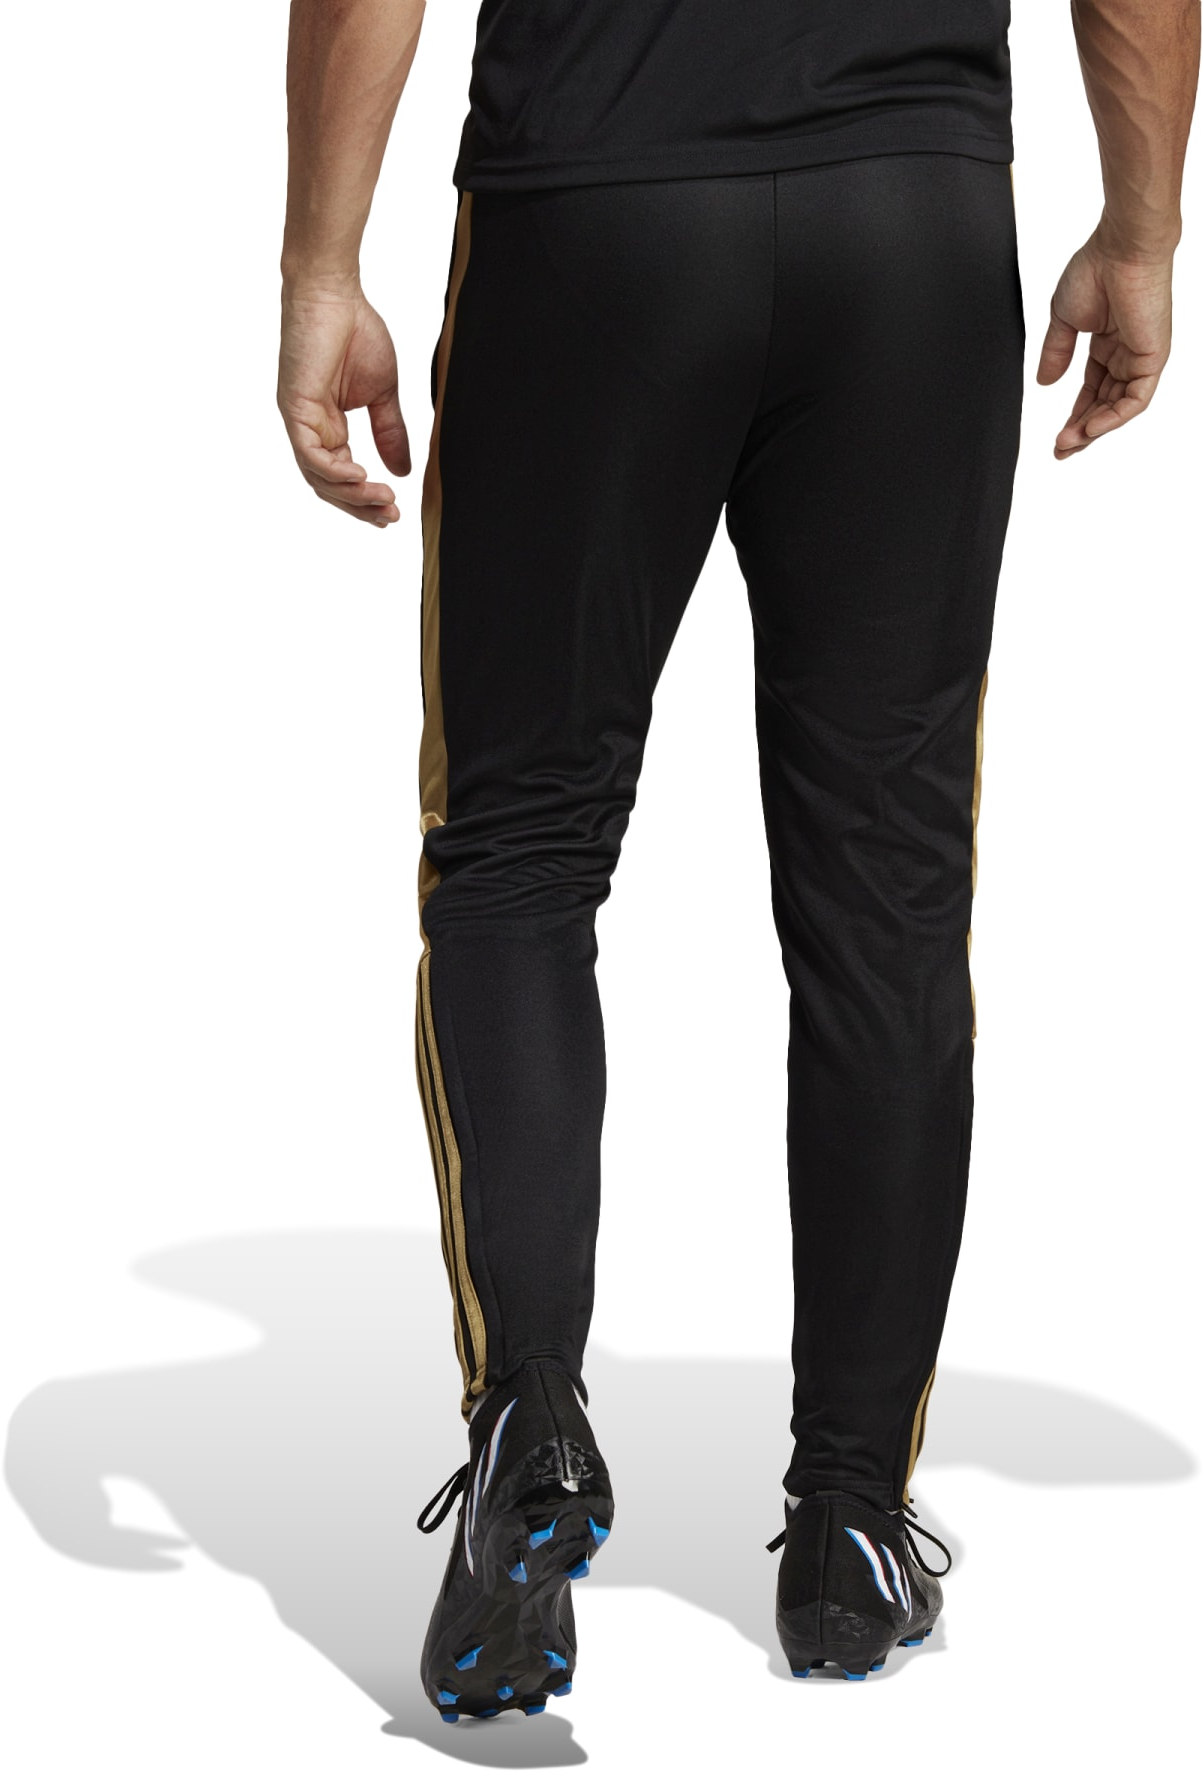 adidas Men's Soccer Messi Track Pants - Black adidas US